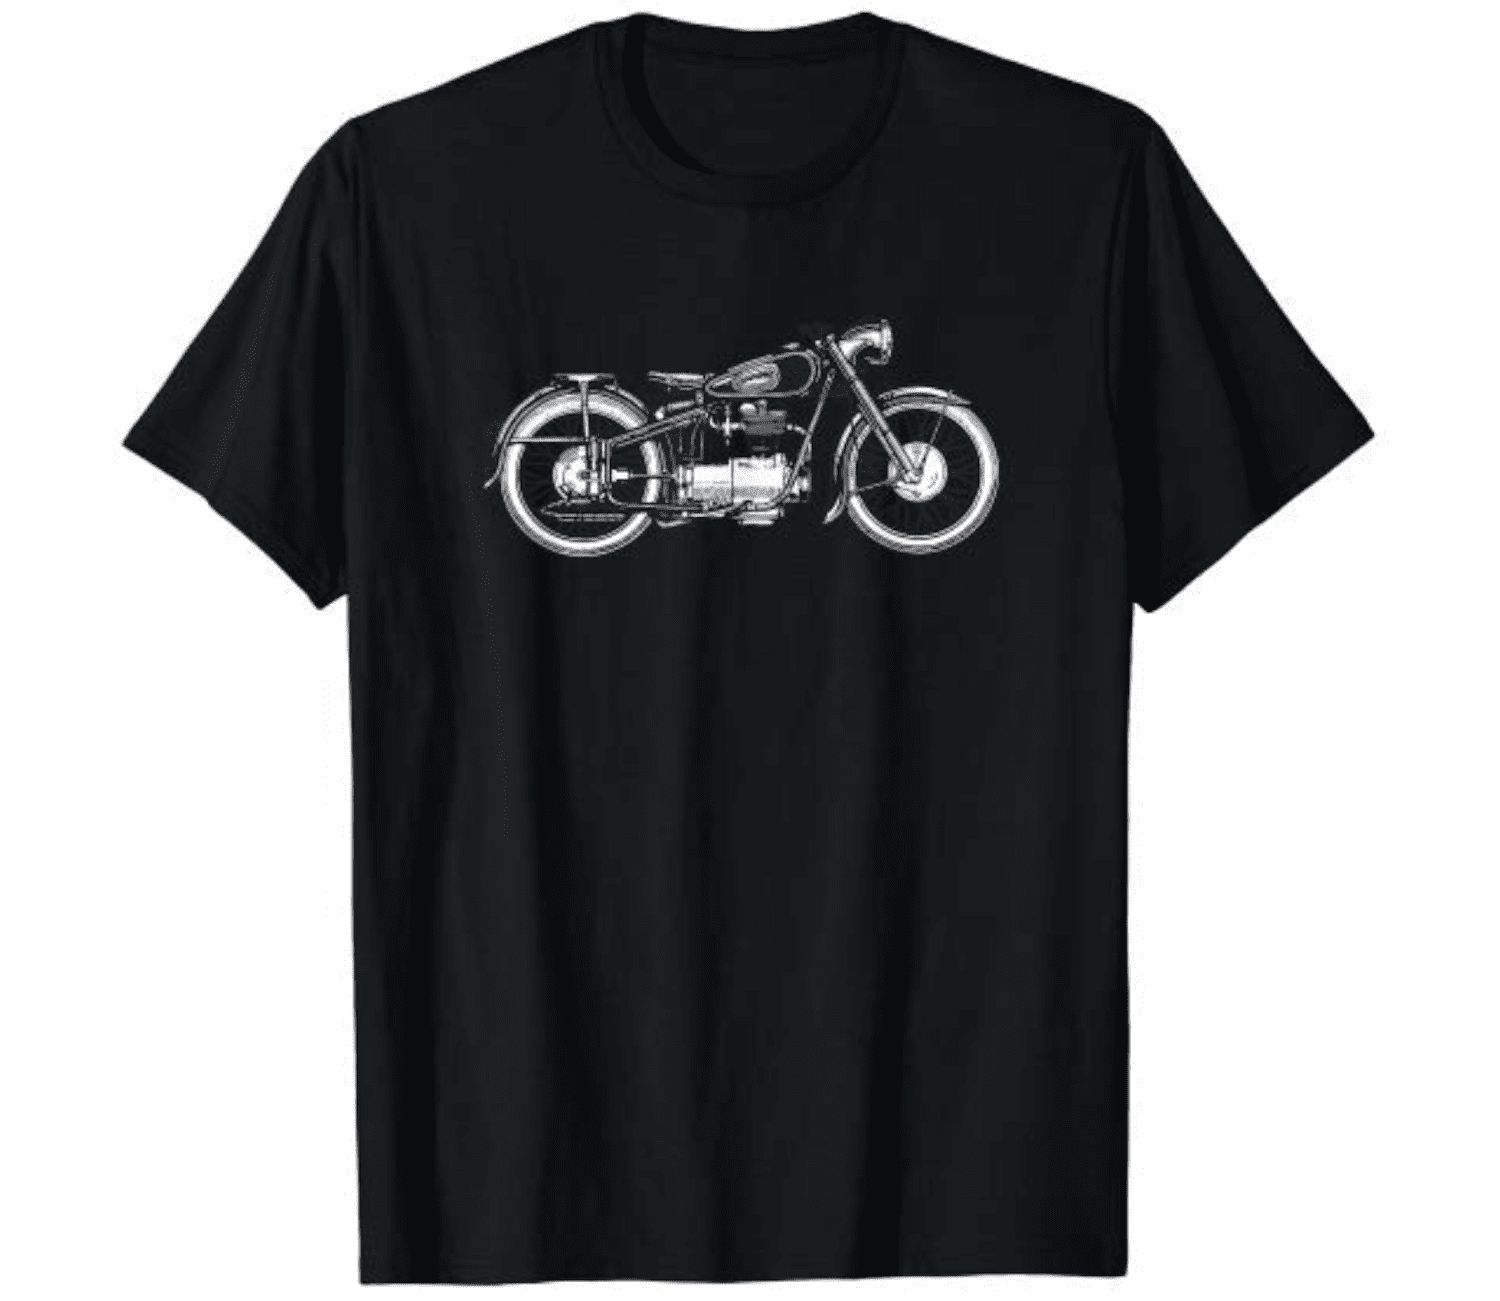 Retro vintage motorcycle shirt